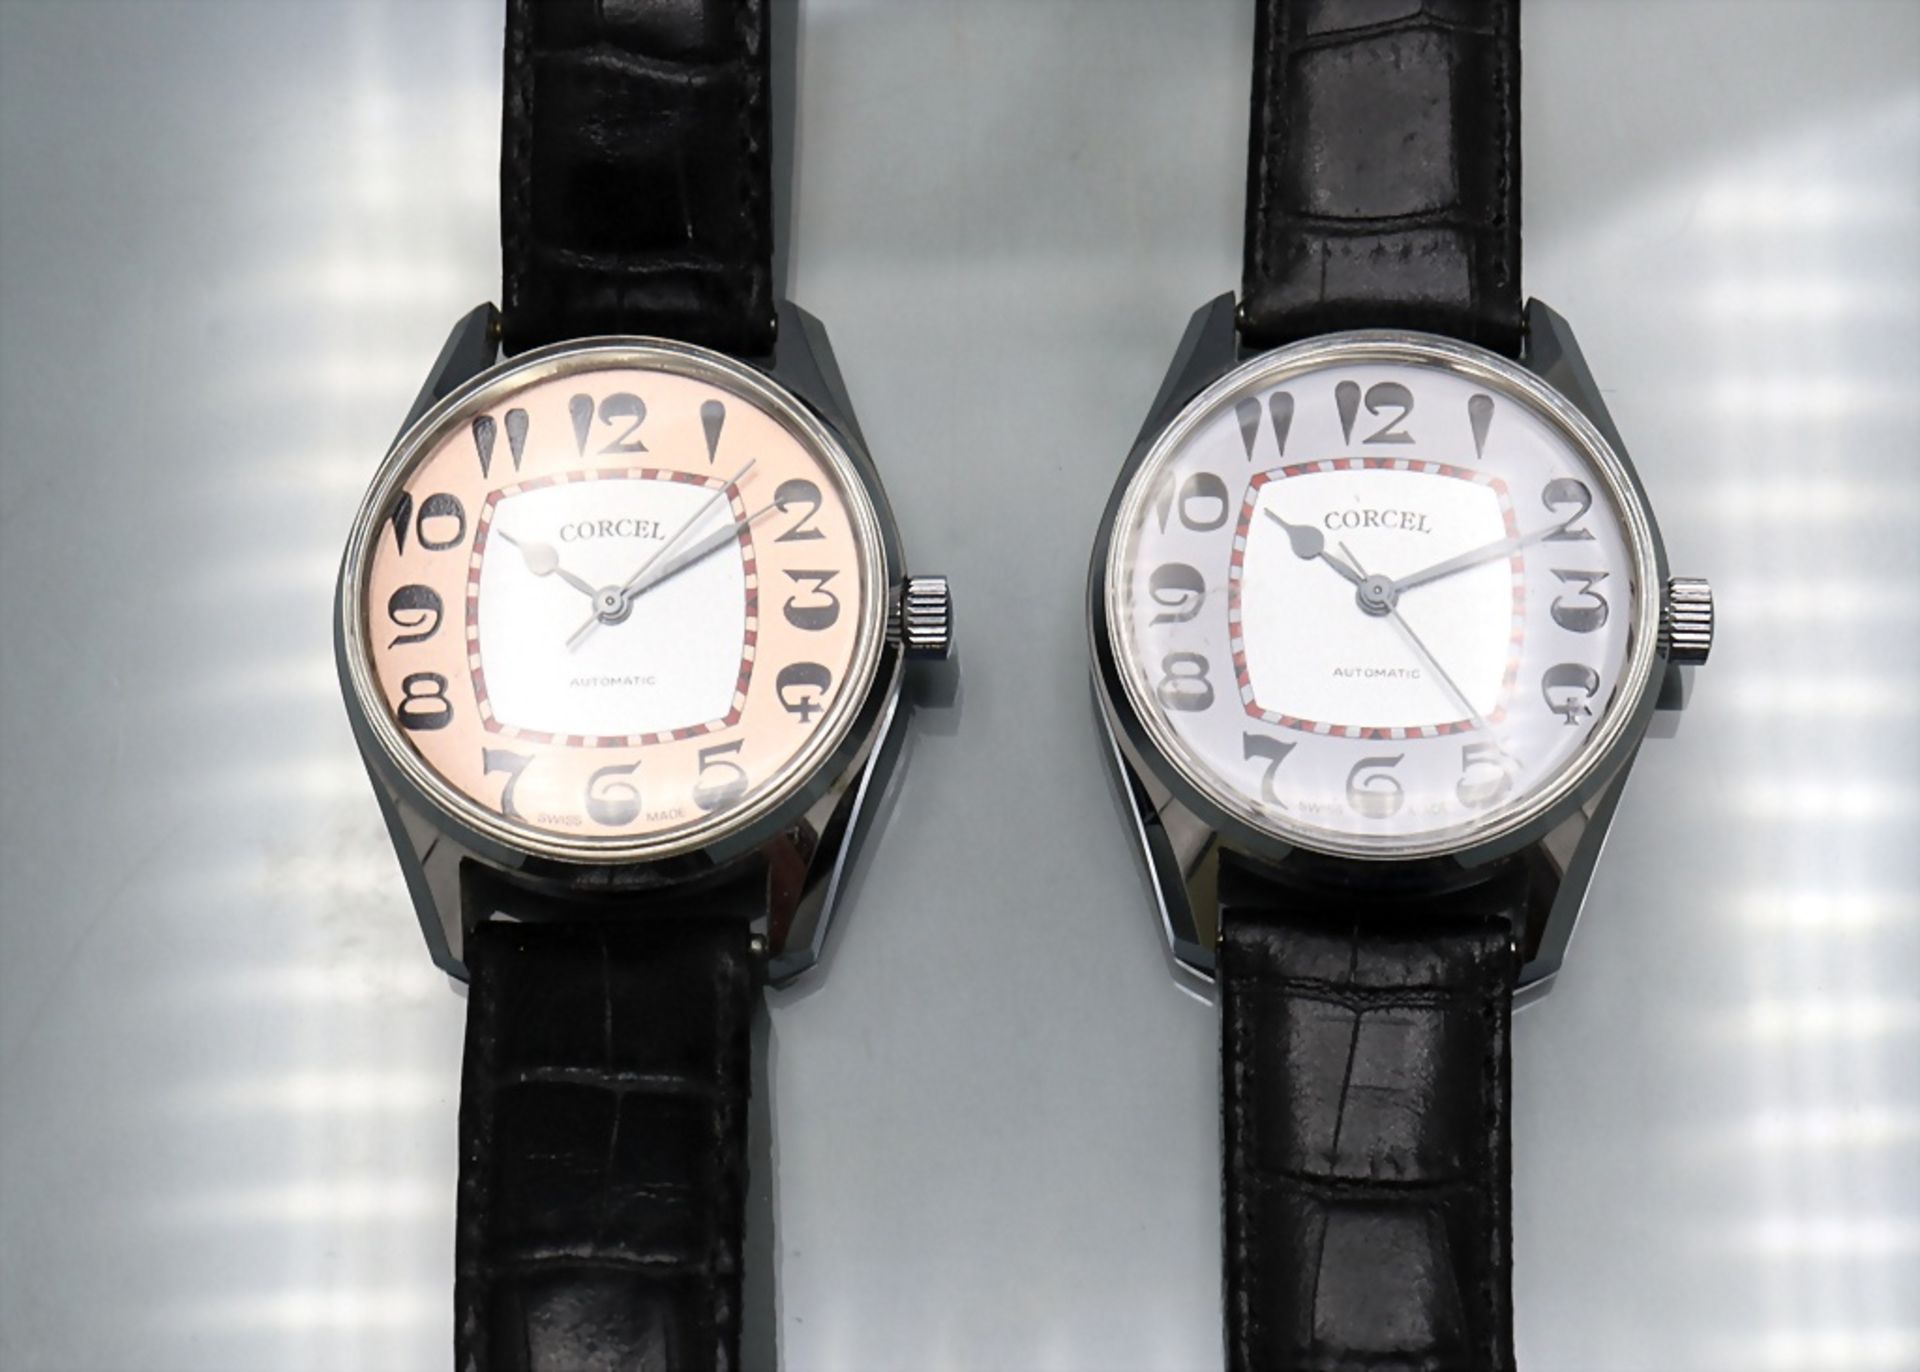 Zwei Herrenarmbanduhren / Two men's wristwatches, Corcel - Image 6 of 7